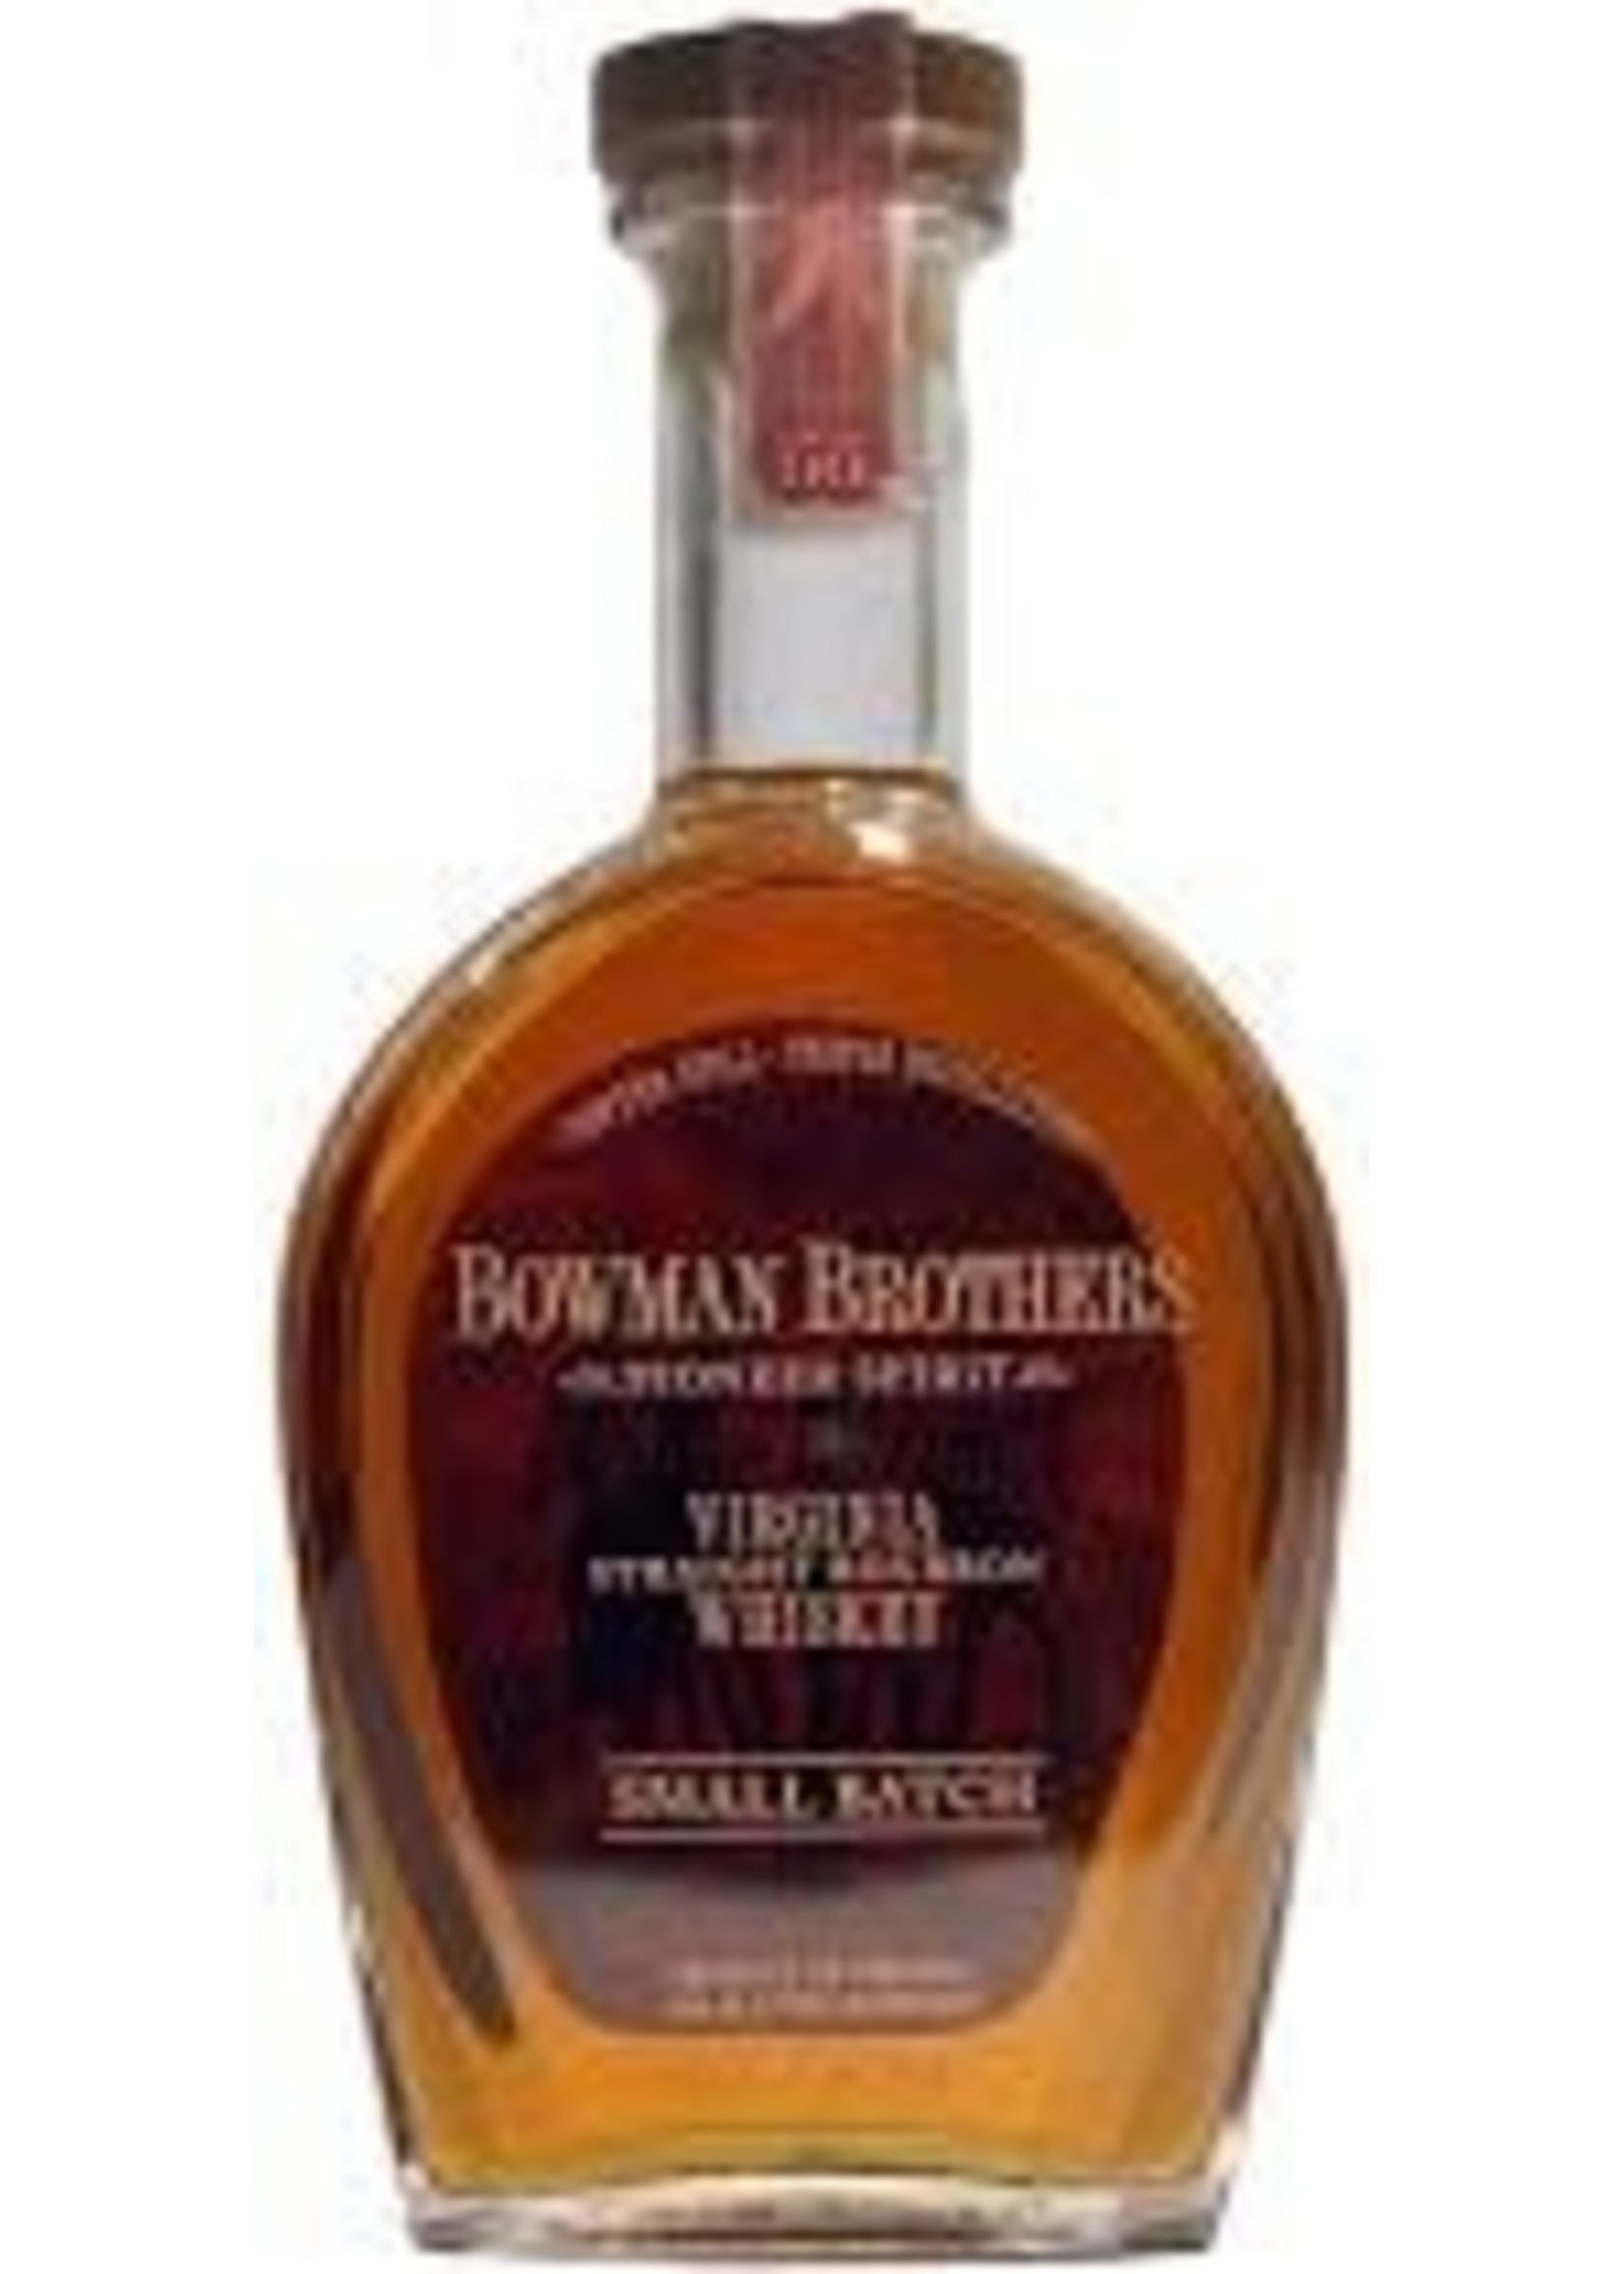 Bowman Brothers Small Batch Virginia Straight Bourbon Whiskey 90 PF 750ml